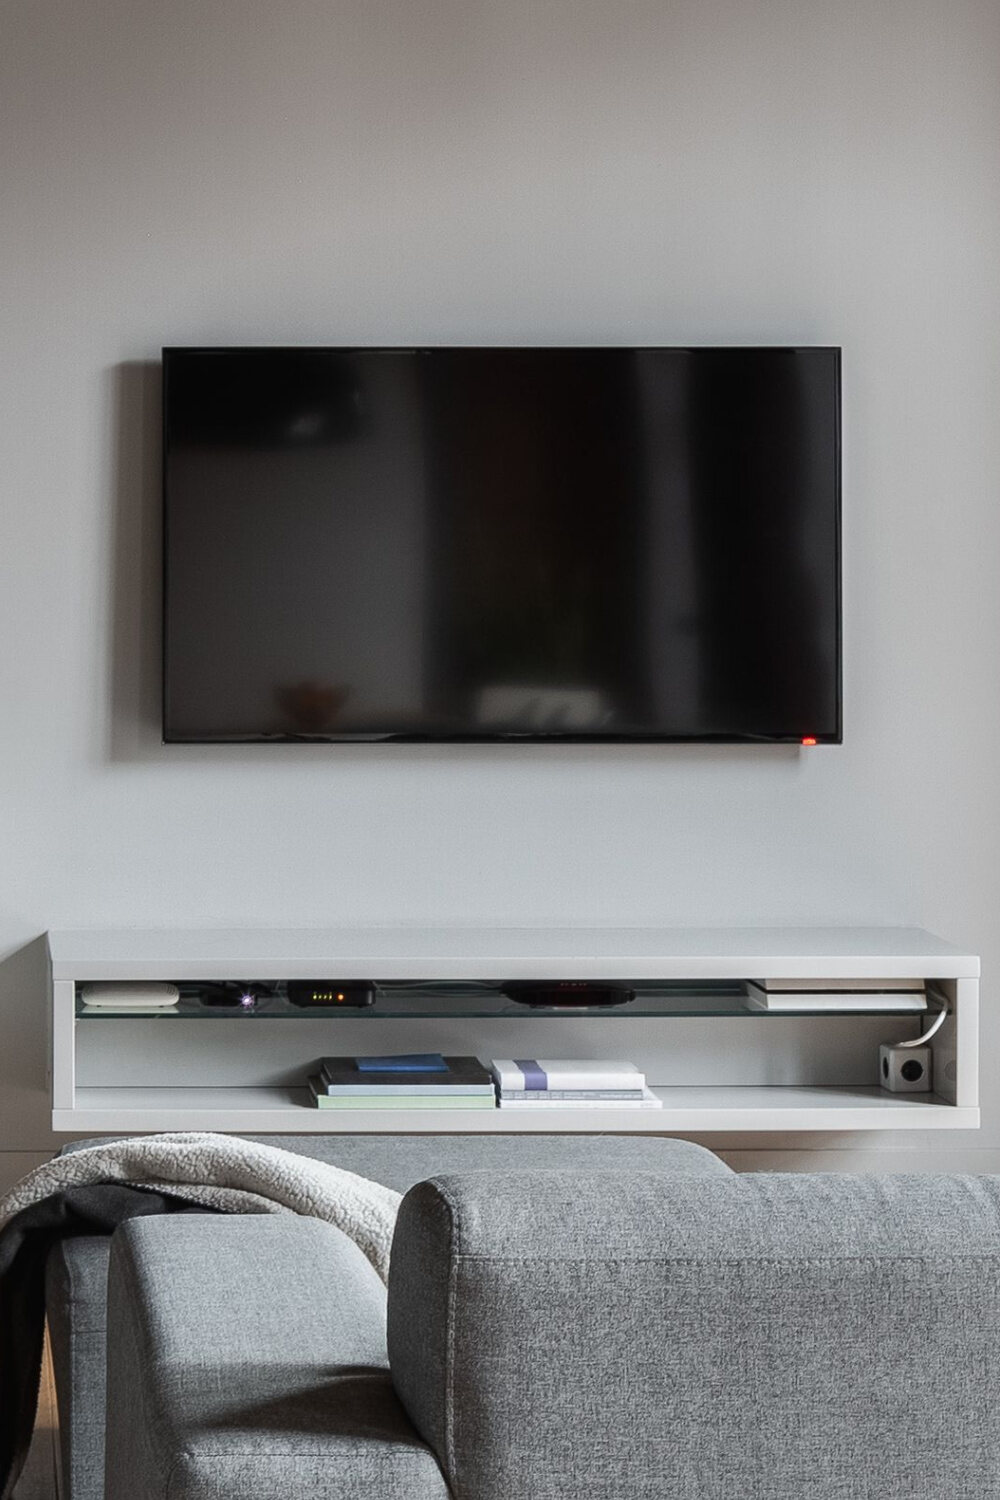 TV mounted above a shelf